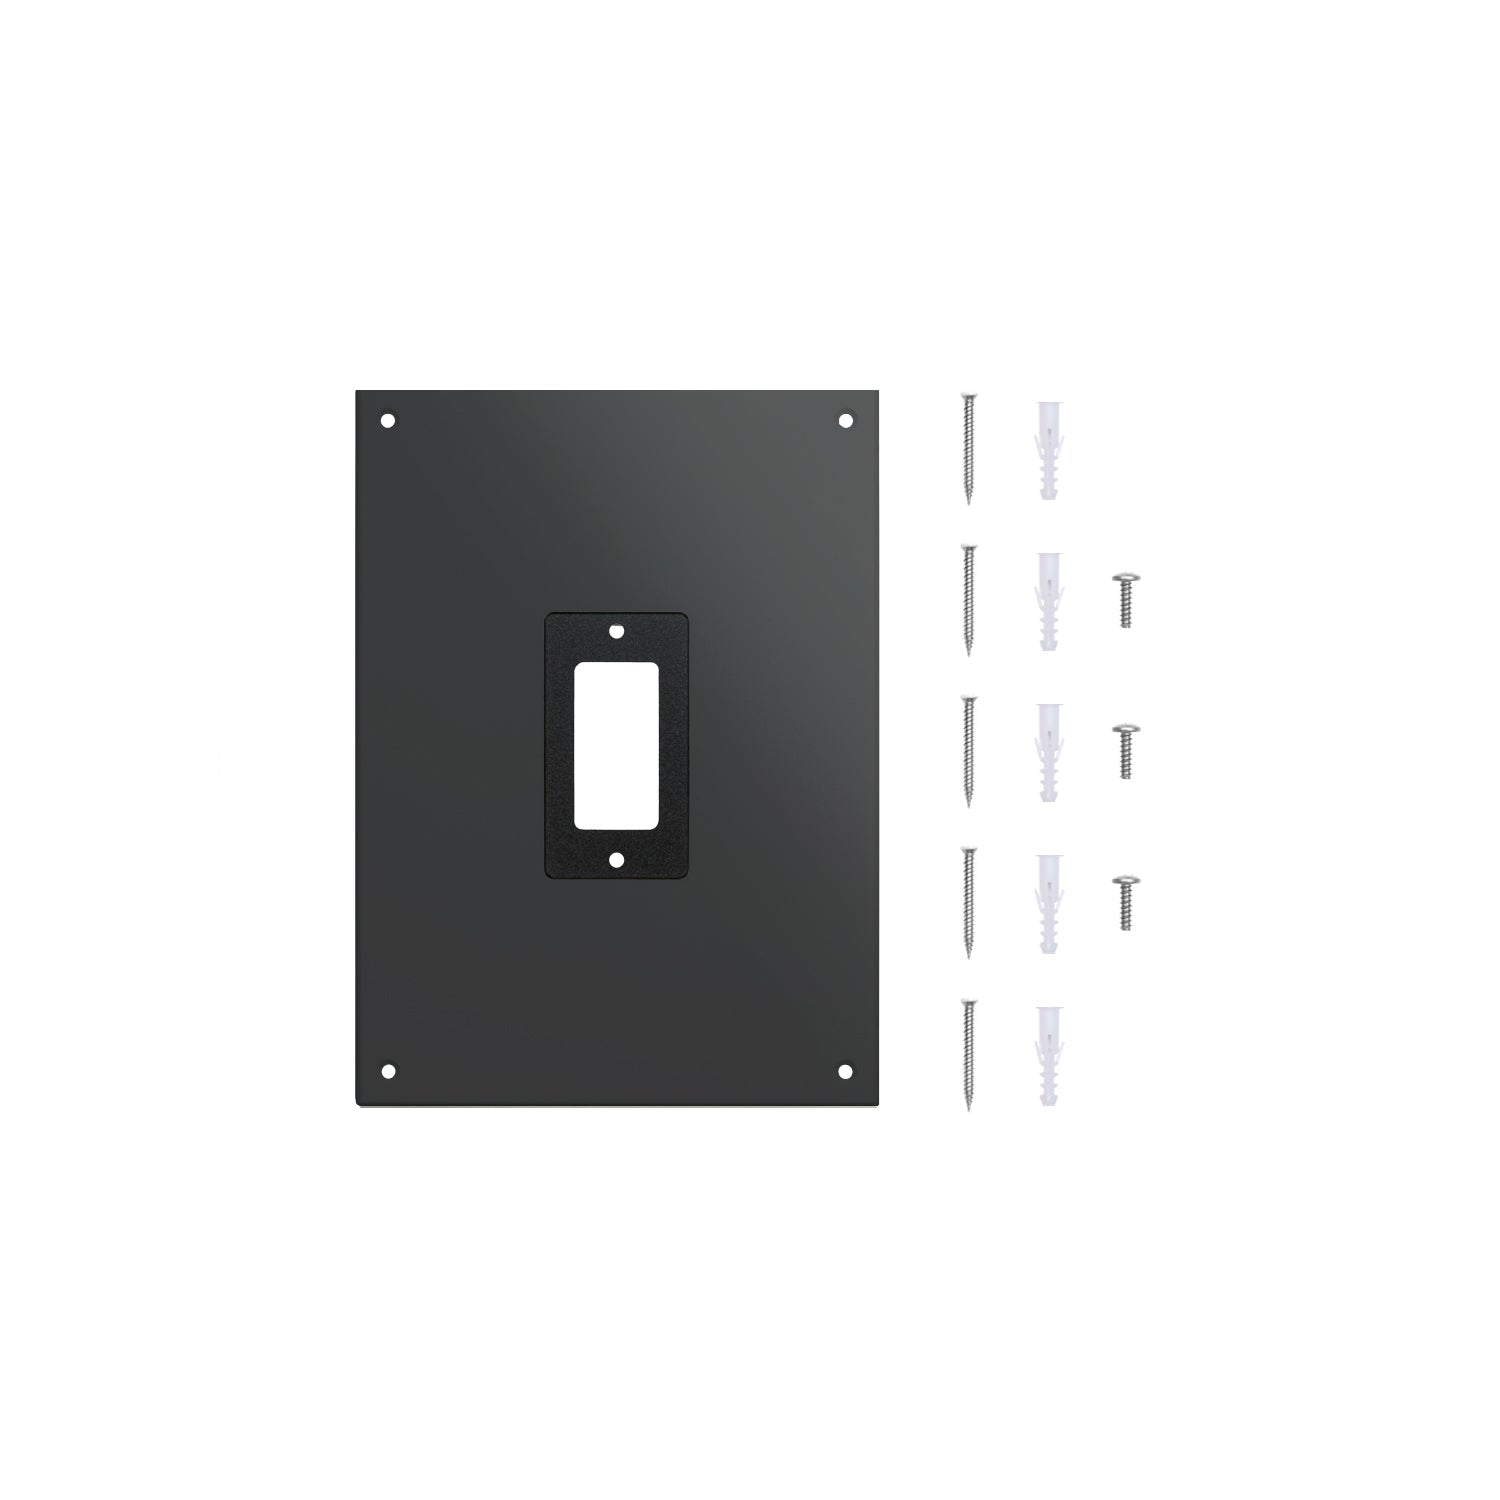 Ring Intercom Kit (Video Doorbell Wired, Video Doorbell (2nd Gen), Video Doorbell 2, Video Doorbell 3/3 Plus, Video Doorbell 4, Battery Doorbell Plus/Pro, Wired Doorbell Plus (Video Doorbell Pro), Wired Doorbell Pro (Video Doorbell Pro 2)) - Black